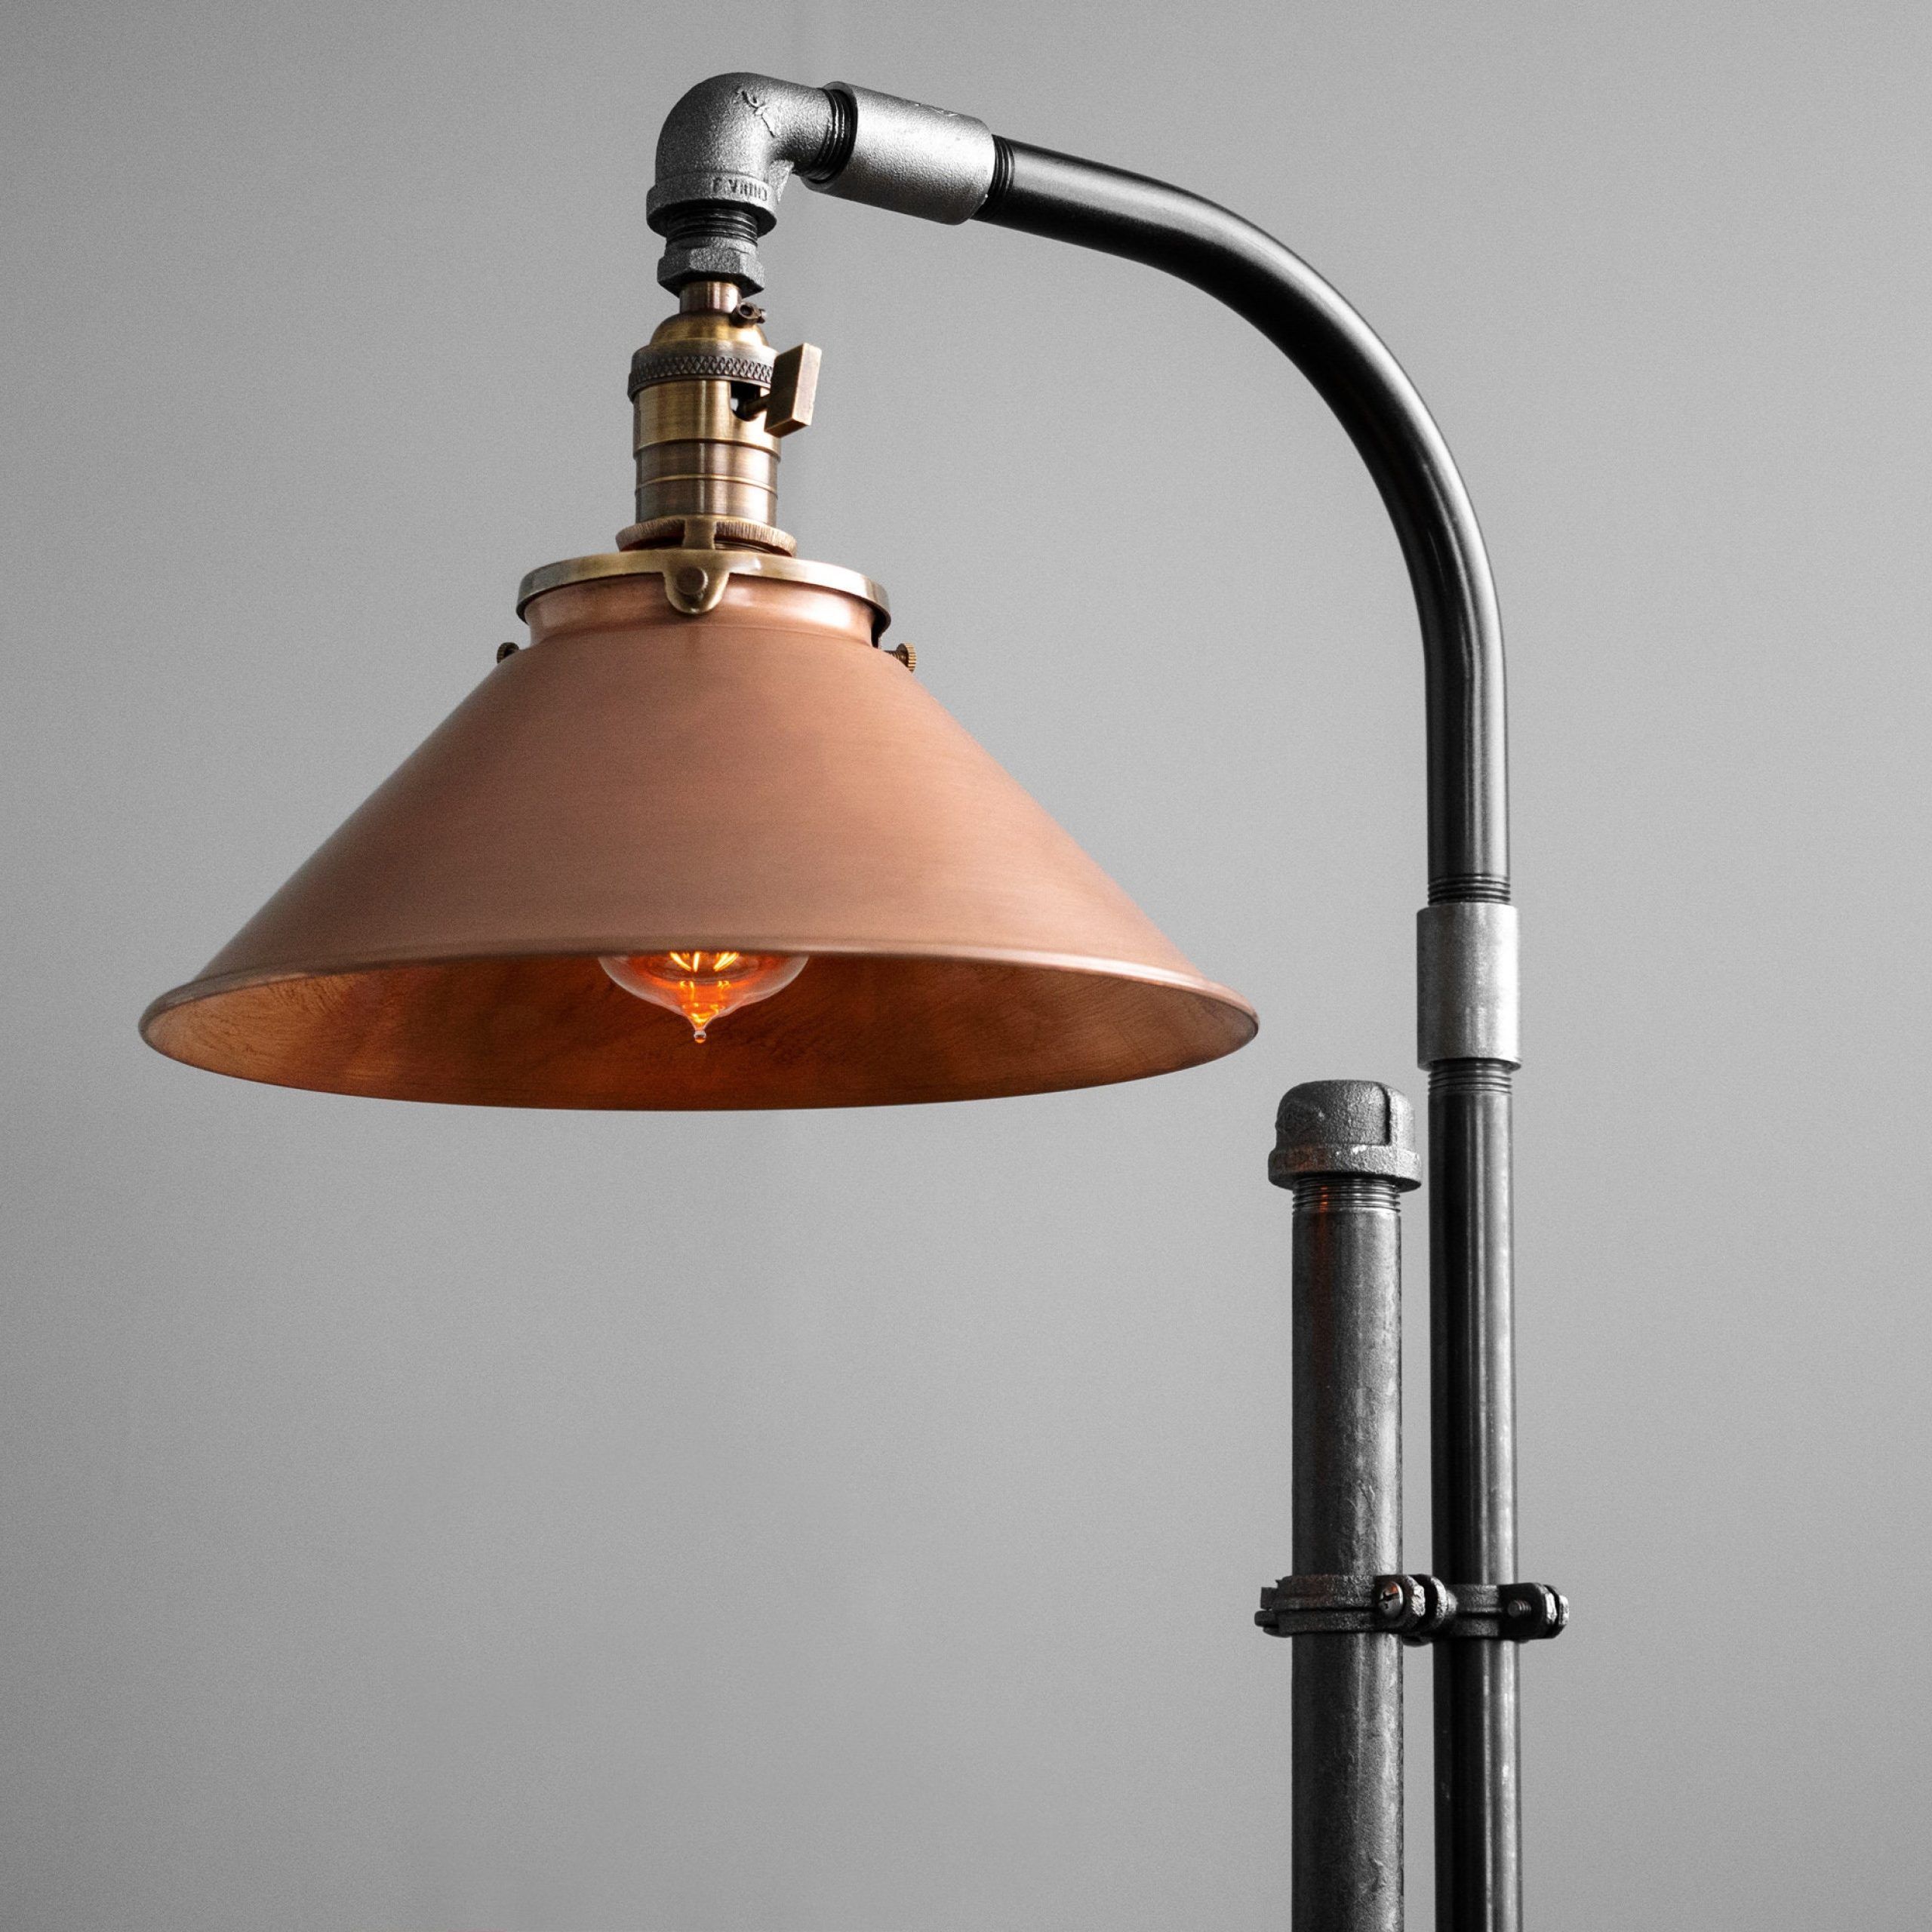 Buy Industrial Floor Lamp Copper Shade Industrial Furniture Online In India  – Etsy With Industrial Floor Lamps (View 12 of 15)